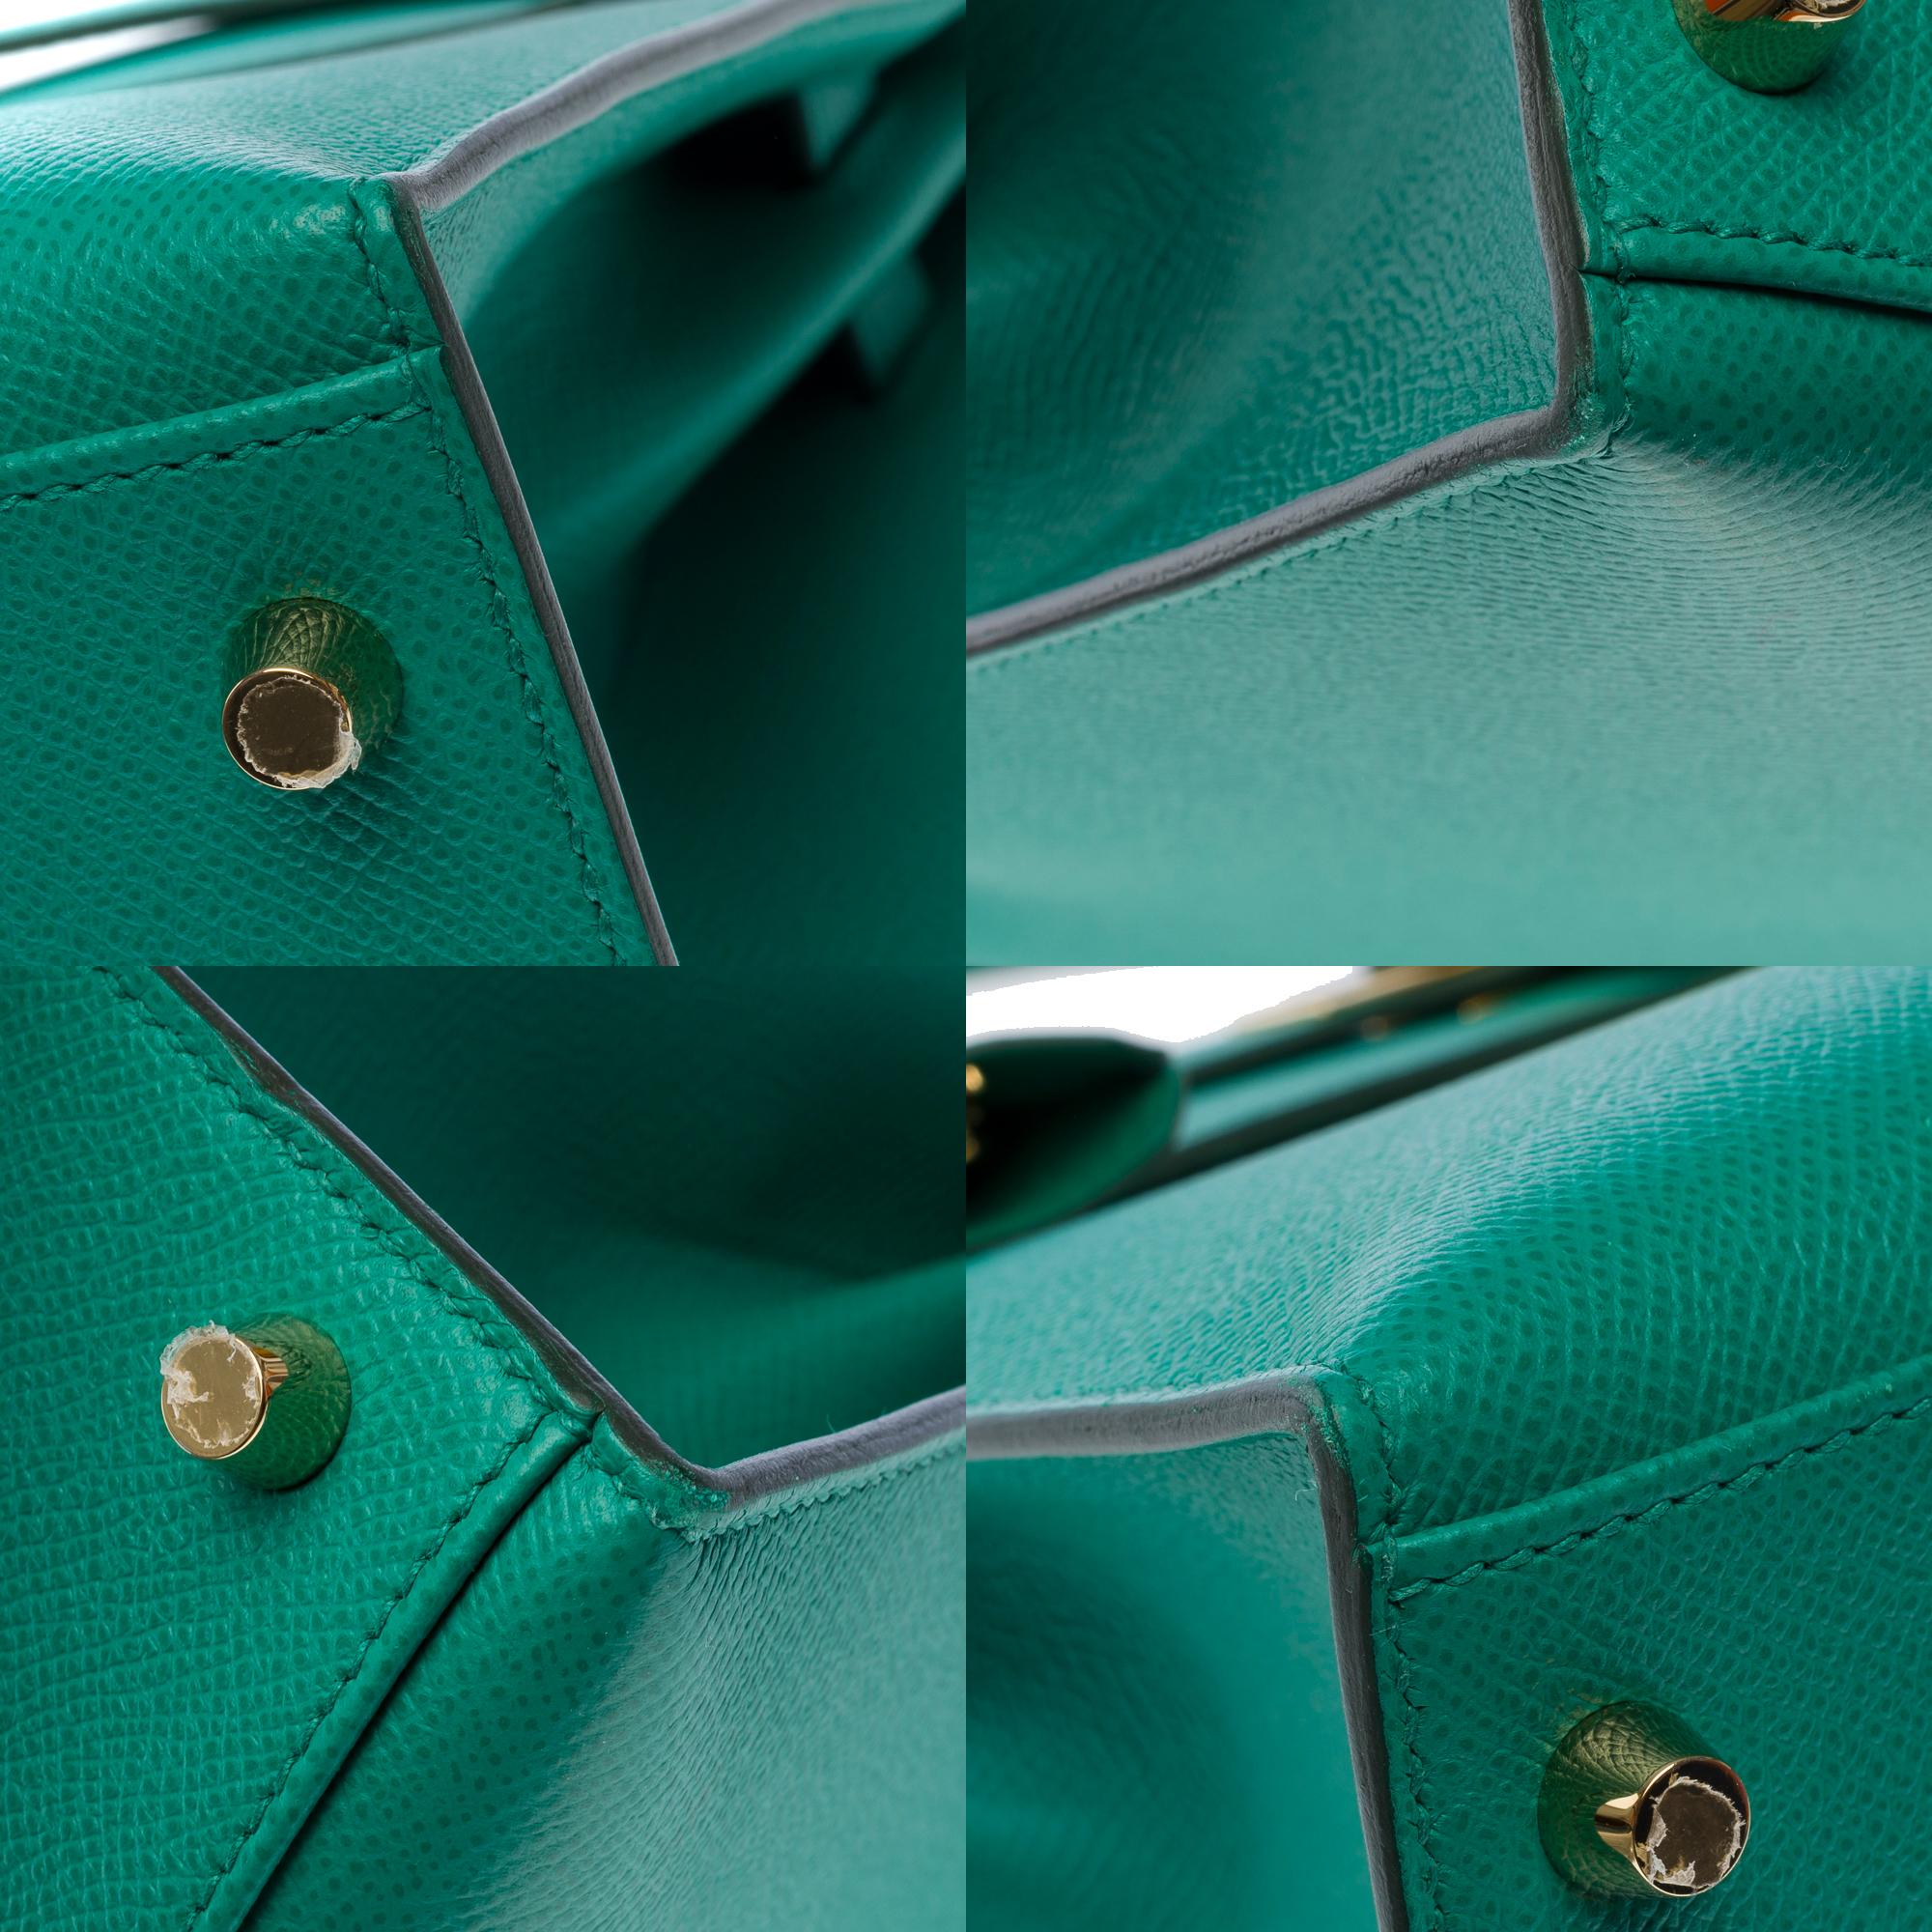 New Hermès Kelly 28 sellier handbag strap in Vert Jade Epsom leather, GHW For Sale 8